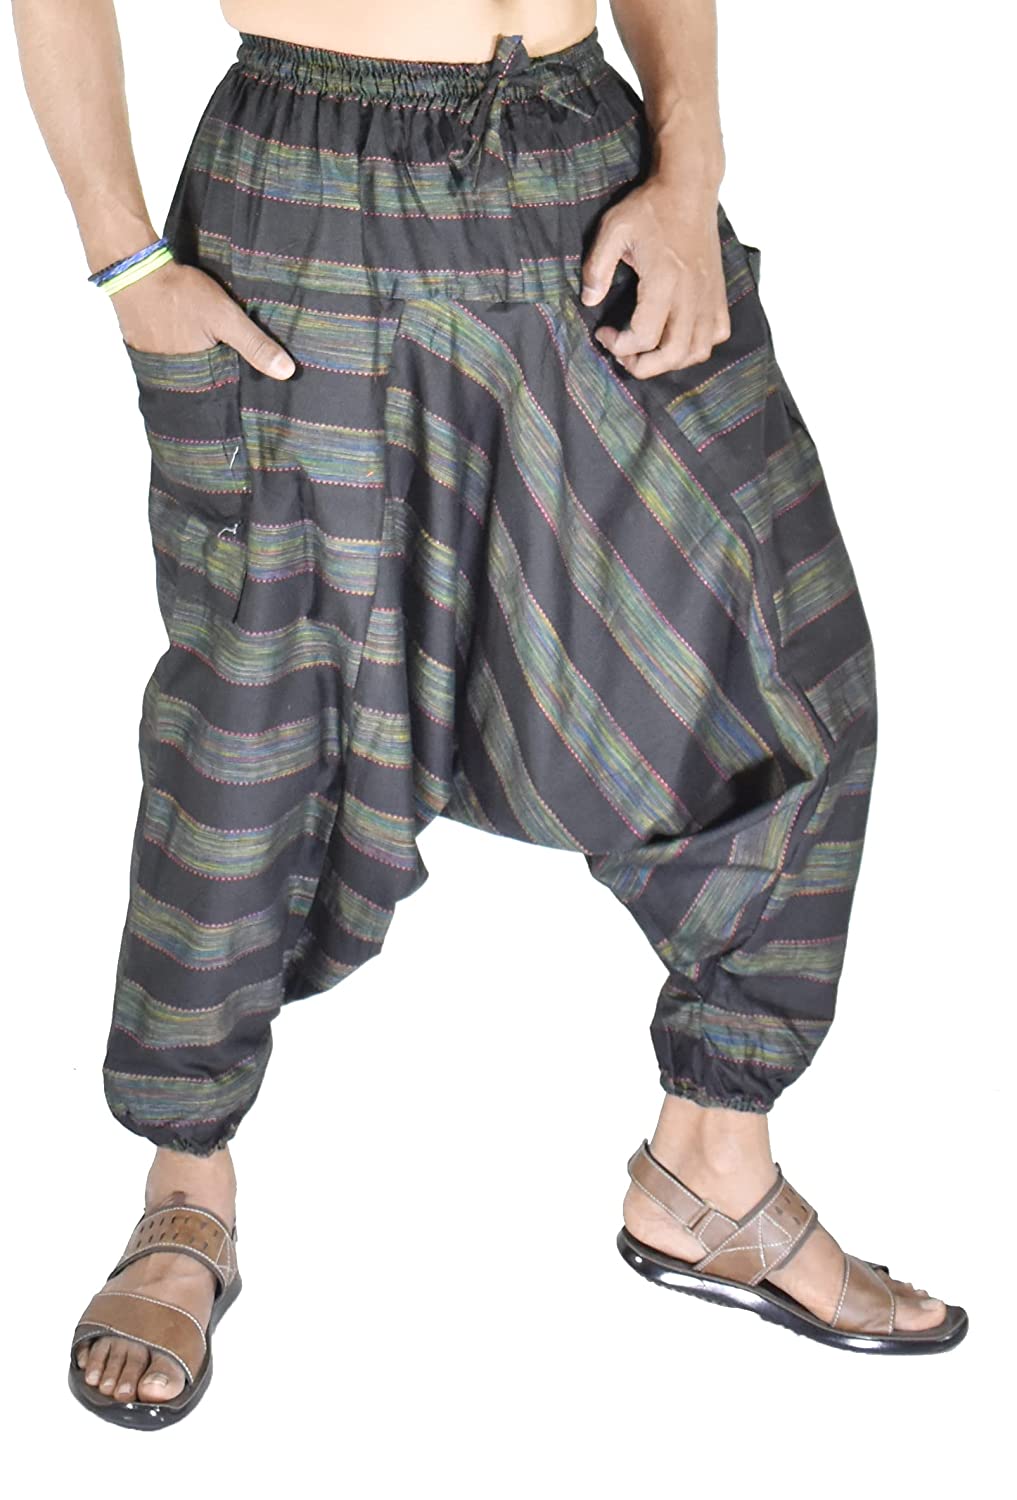 SKA Hippie Nepalese Striped Stonewashed Blockprint Patchwork Trousers  SKA  Clothing